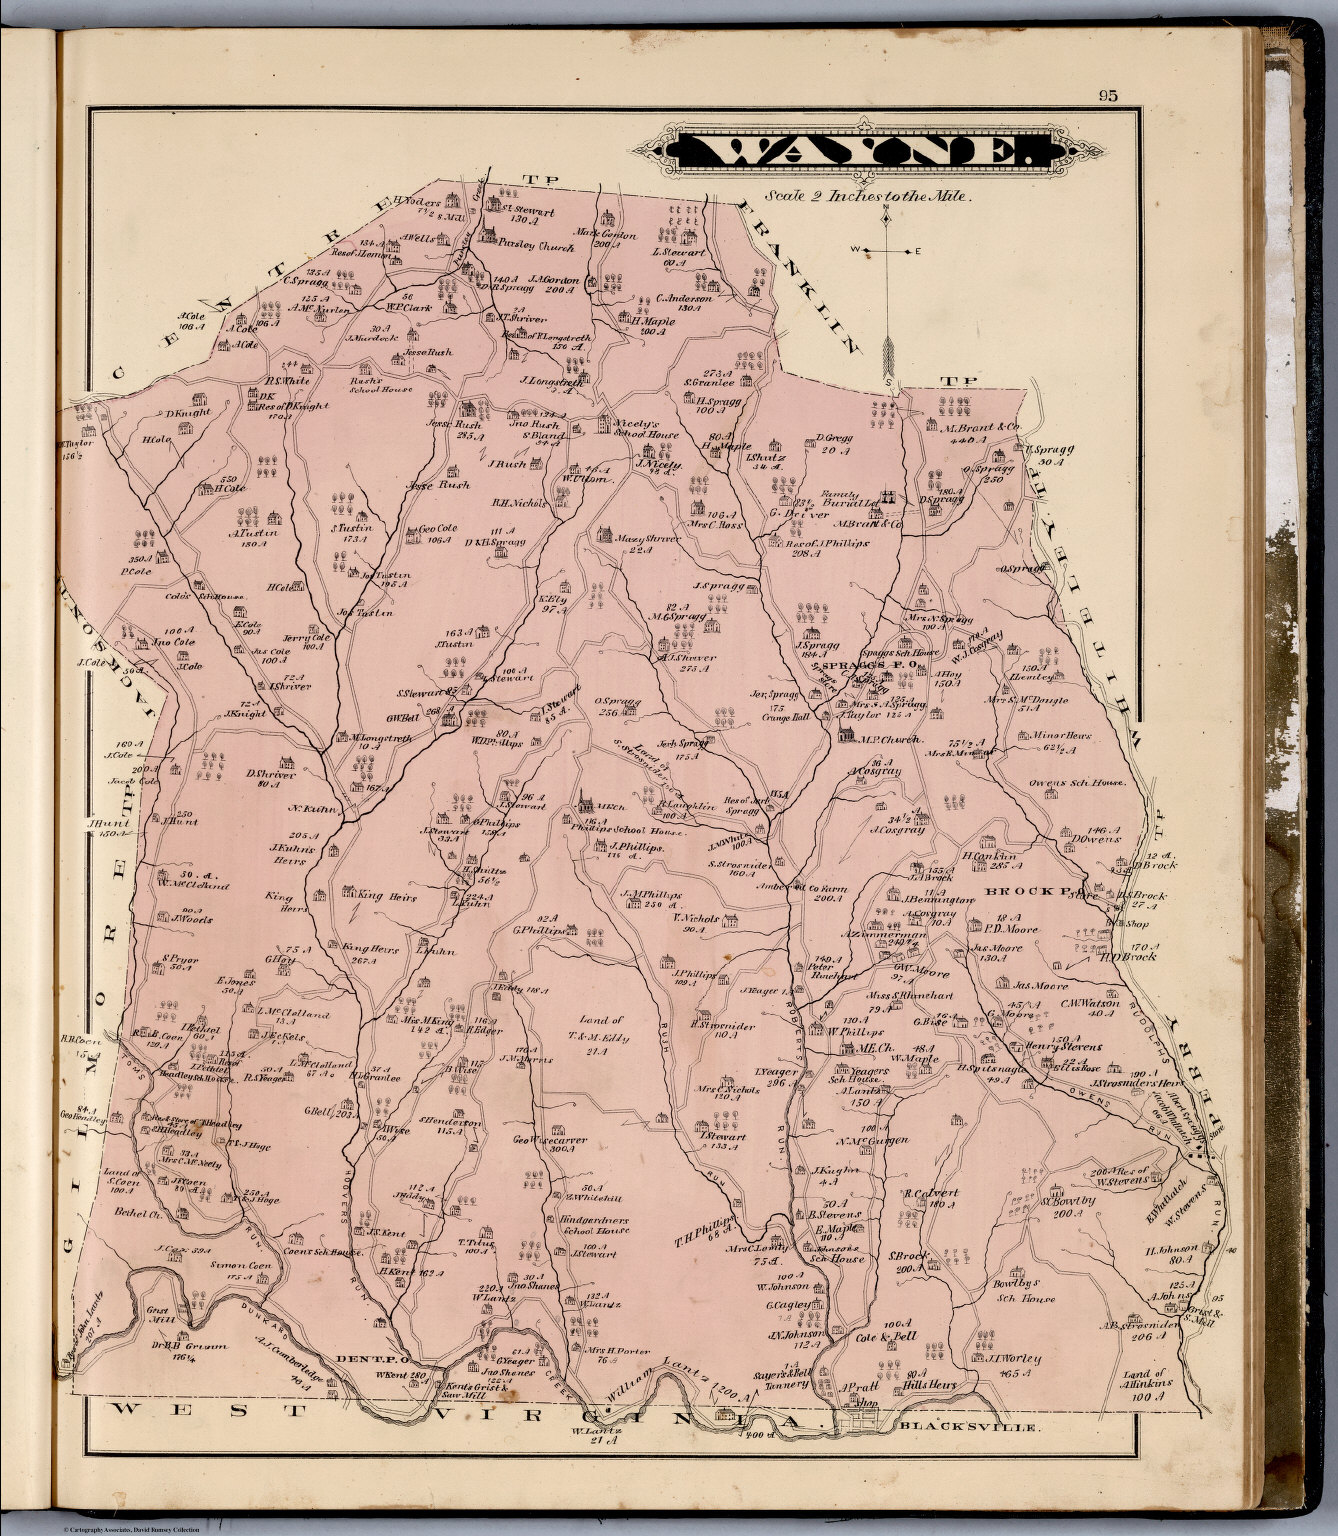 Wayne Greene County Pennsylvania David Rumsey Historical Map Collection